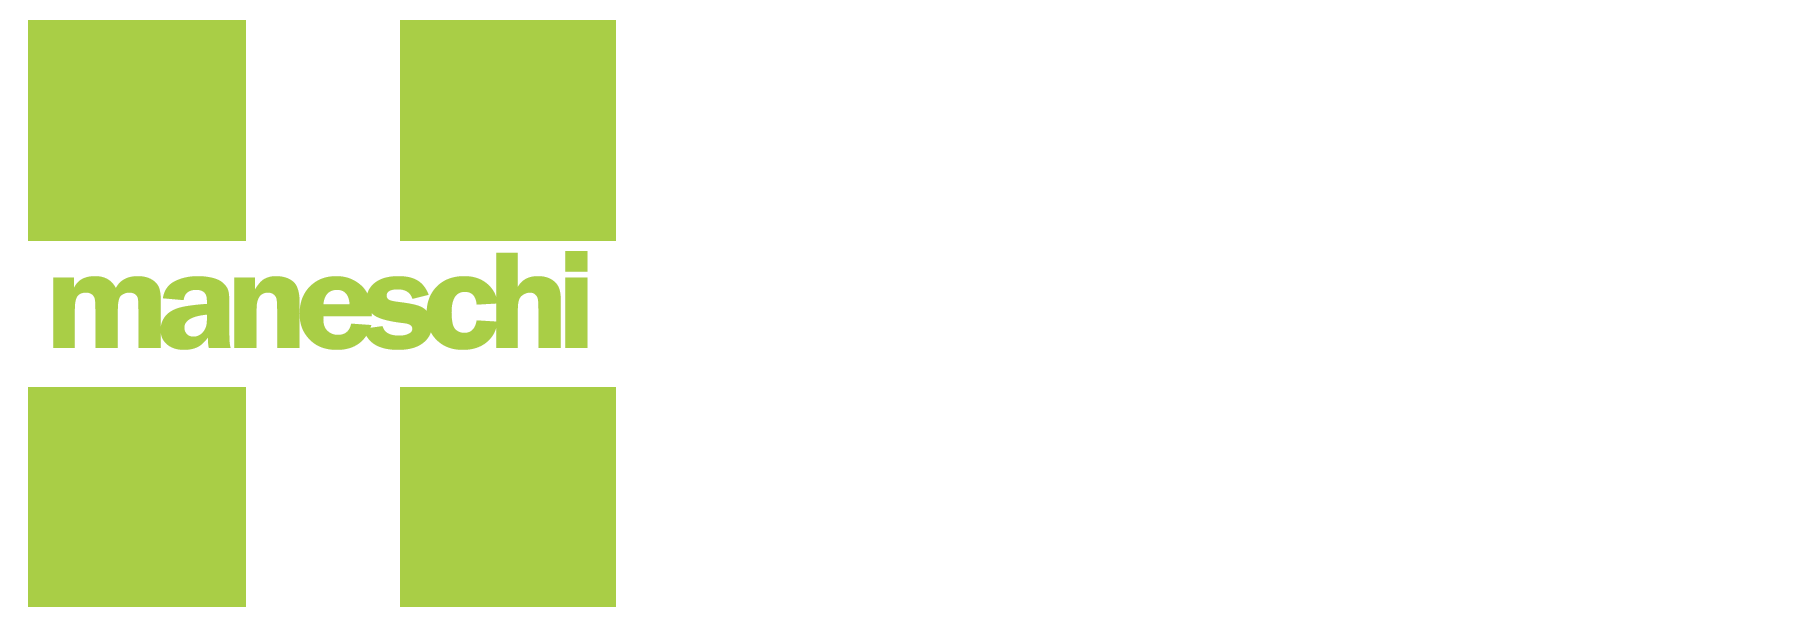 Parafarmacia Sanitaria Ortopedia Maneschi-LOGO